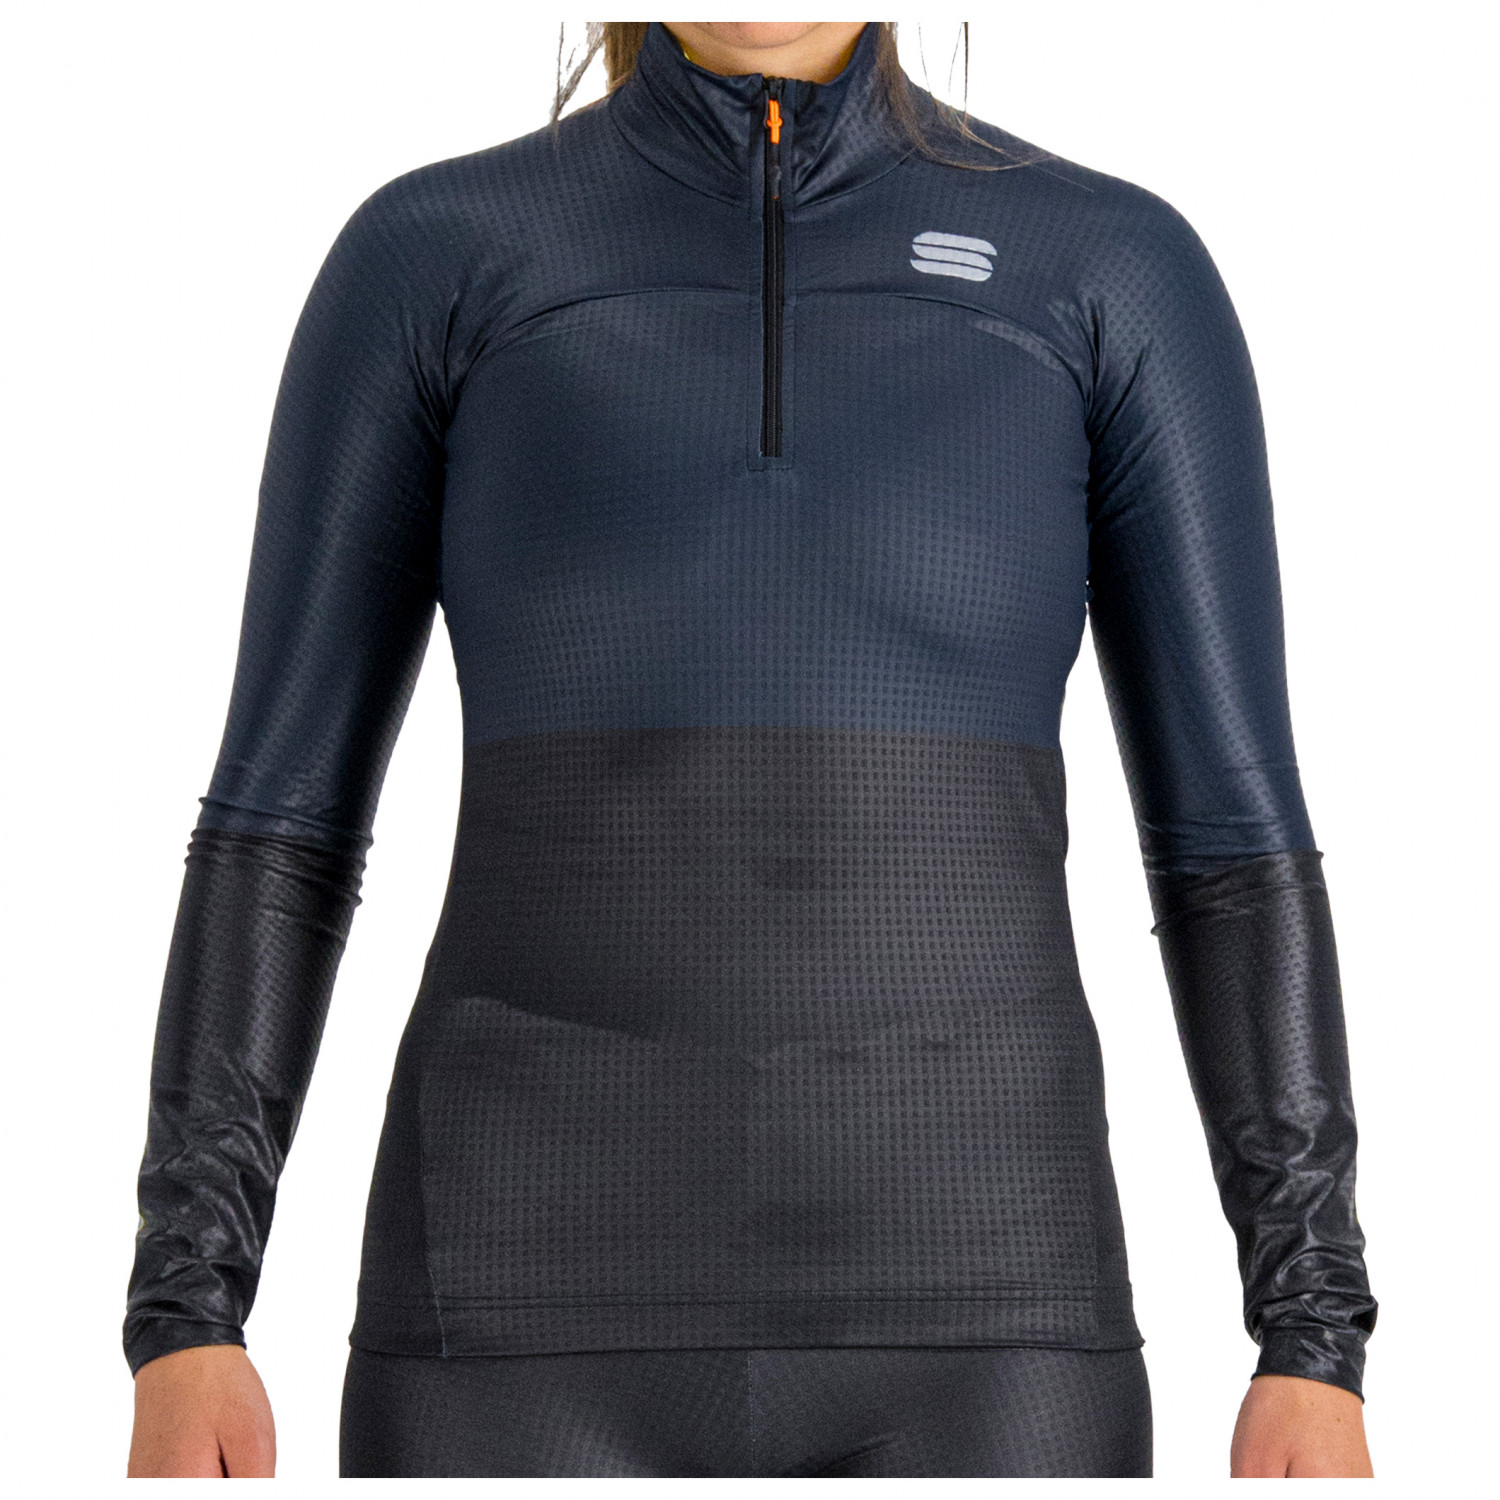 Куртка для беговых лыж Sportful Women's Apex Jersey, цвет Black/Galaxy Blue